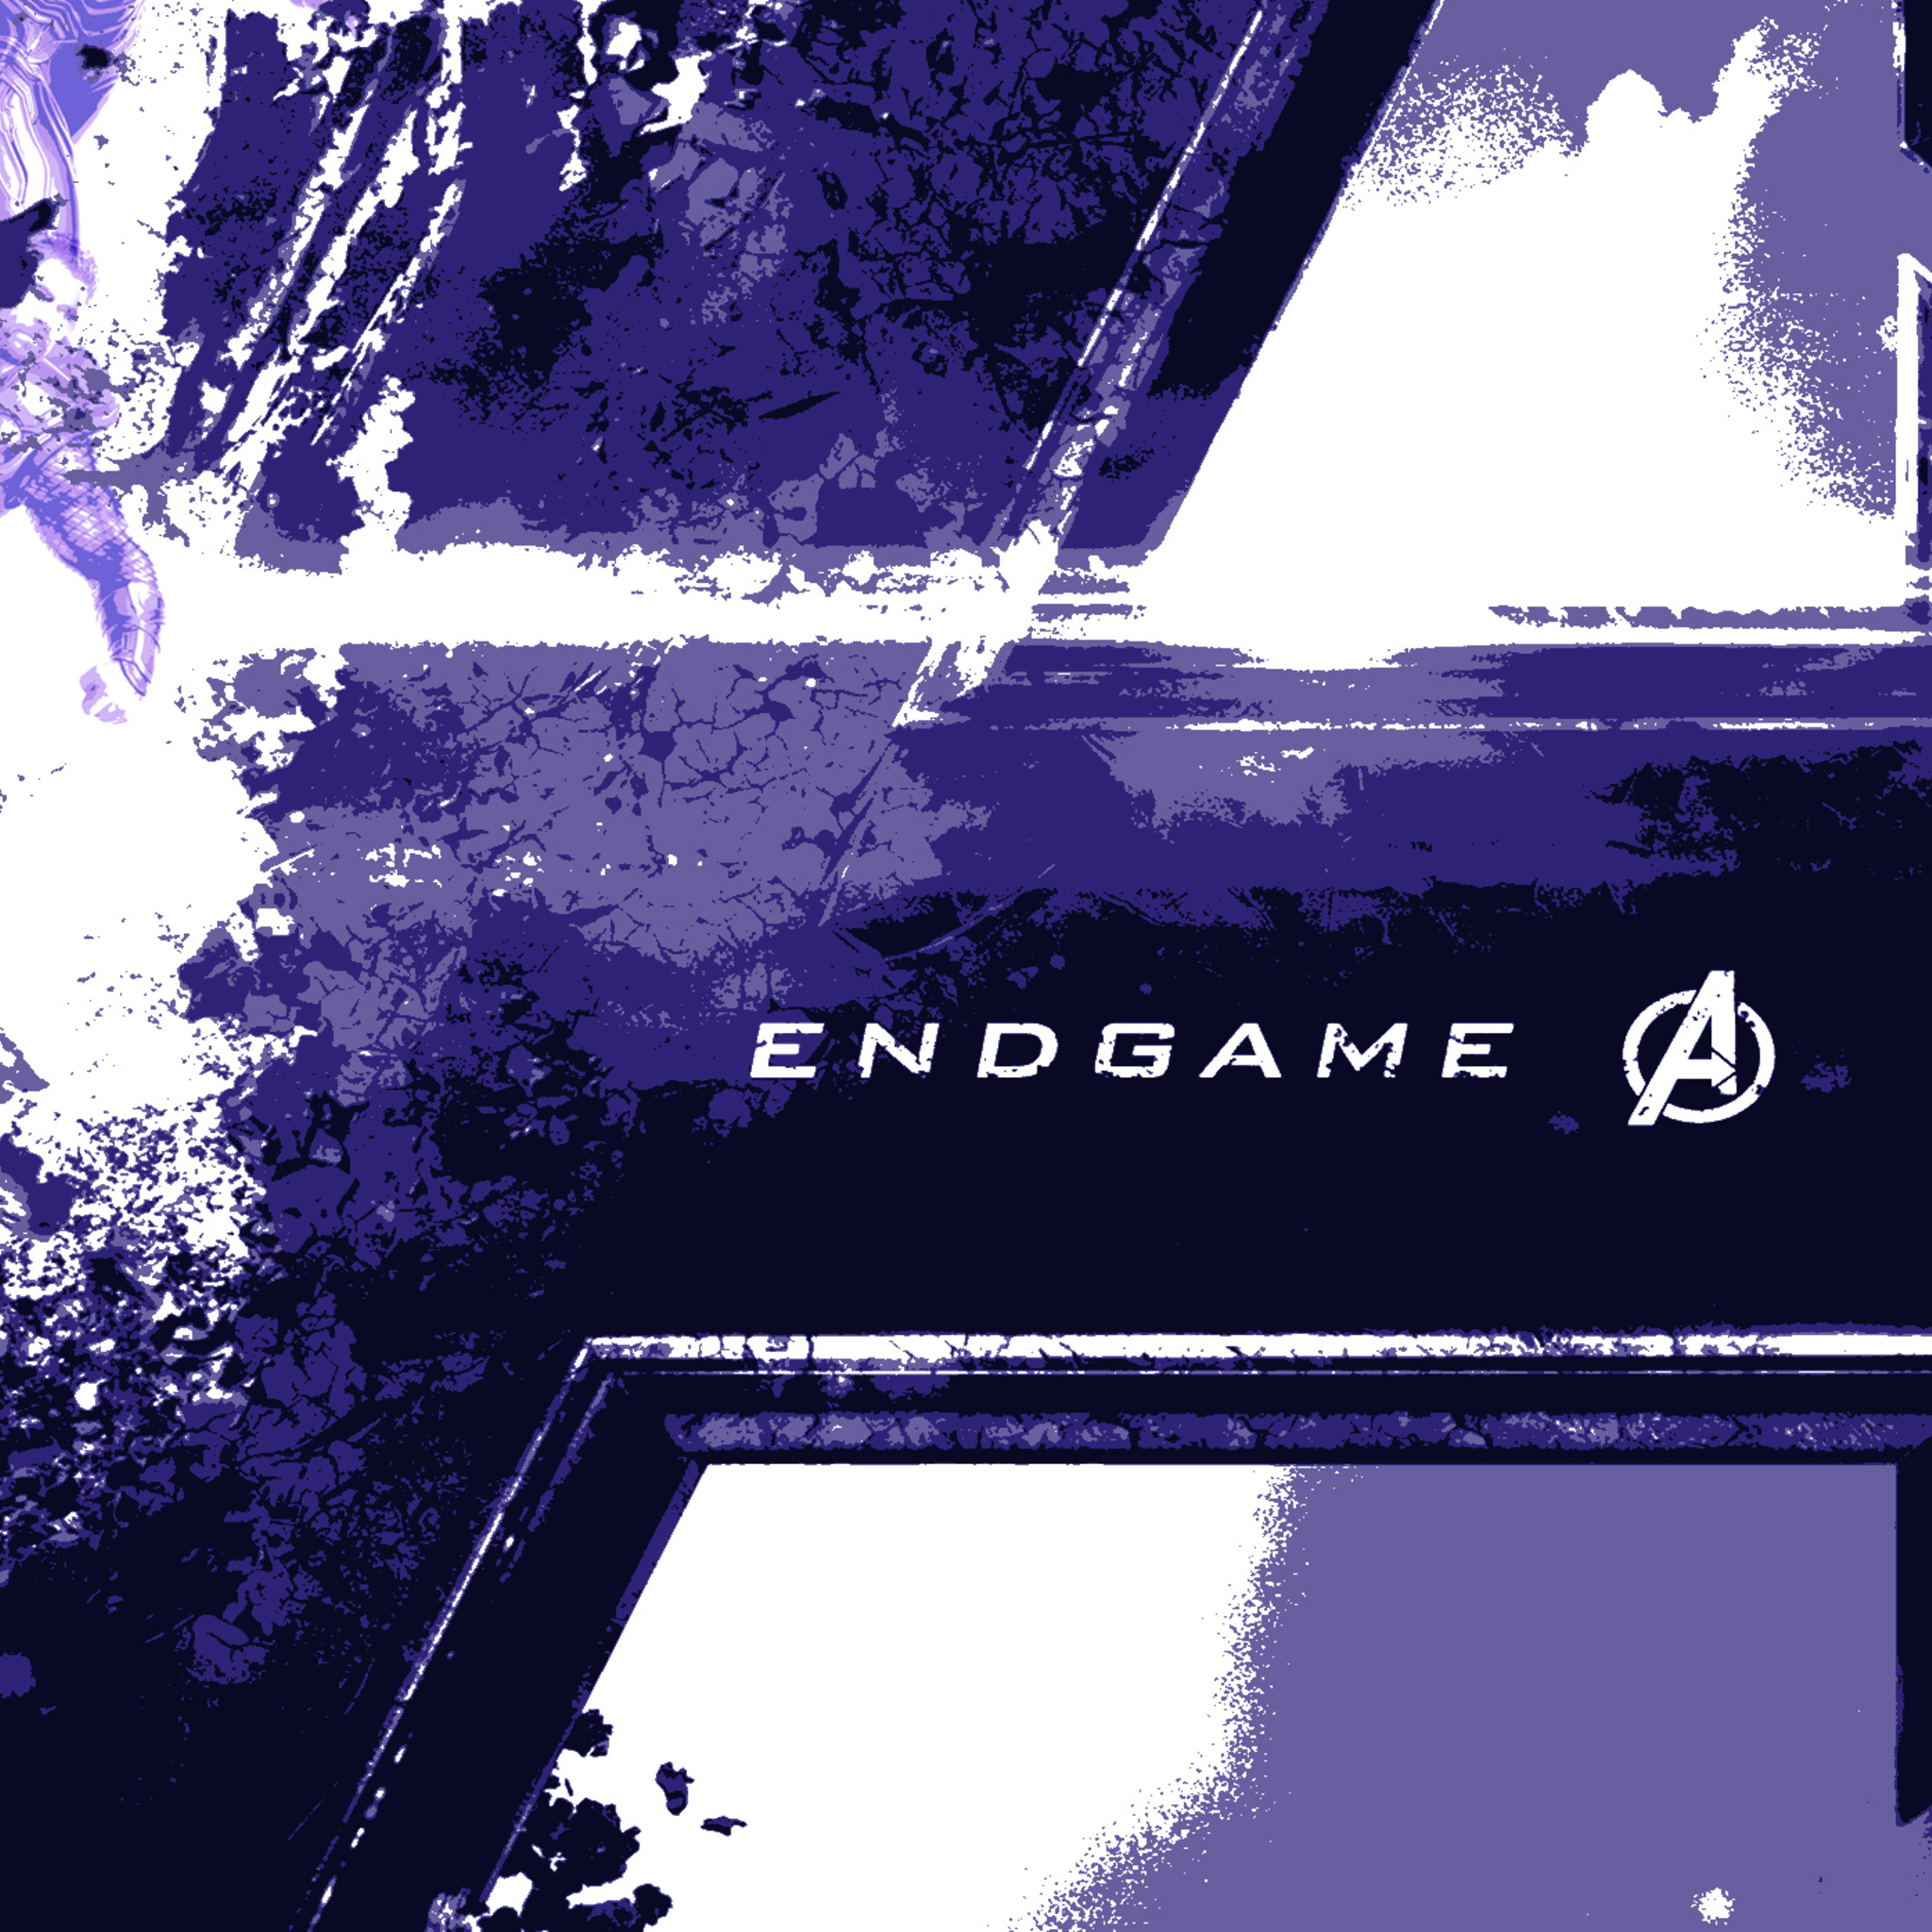 Avengers Endgame Logo Wallpaper Hot Flix Movies